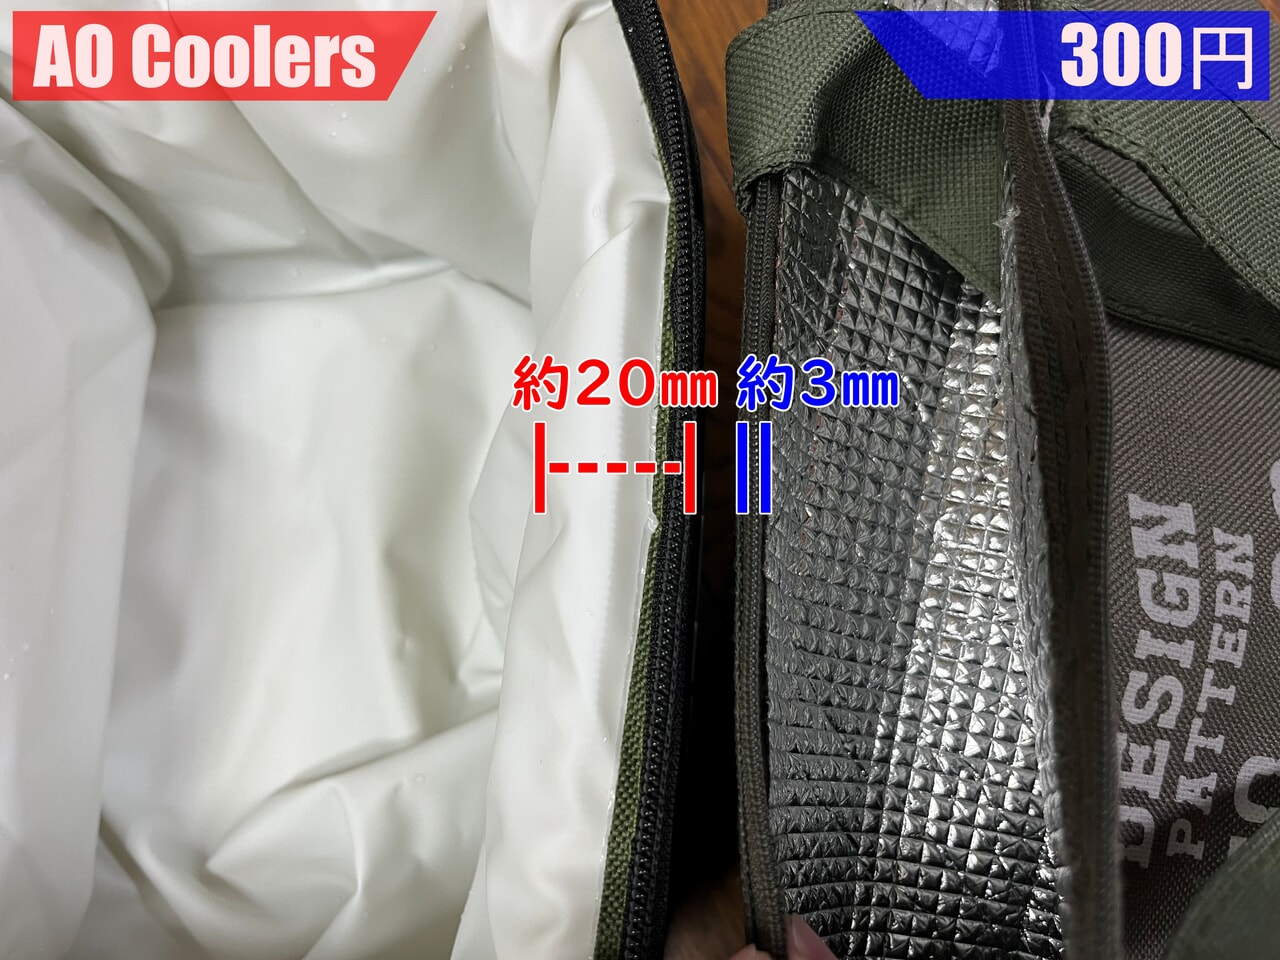 AO Coolersソフトクーラーと300円製品の厚みを比較